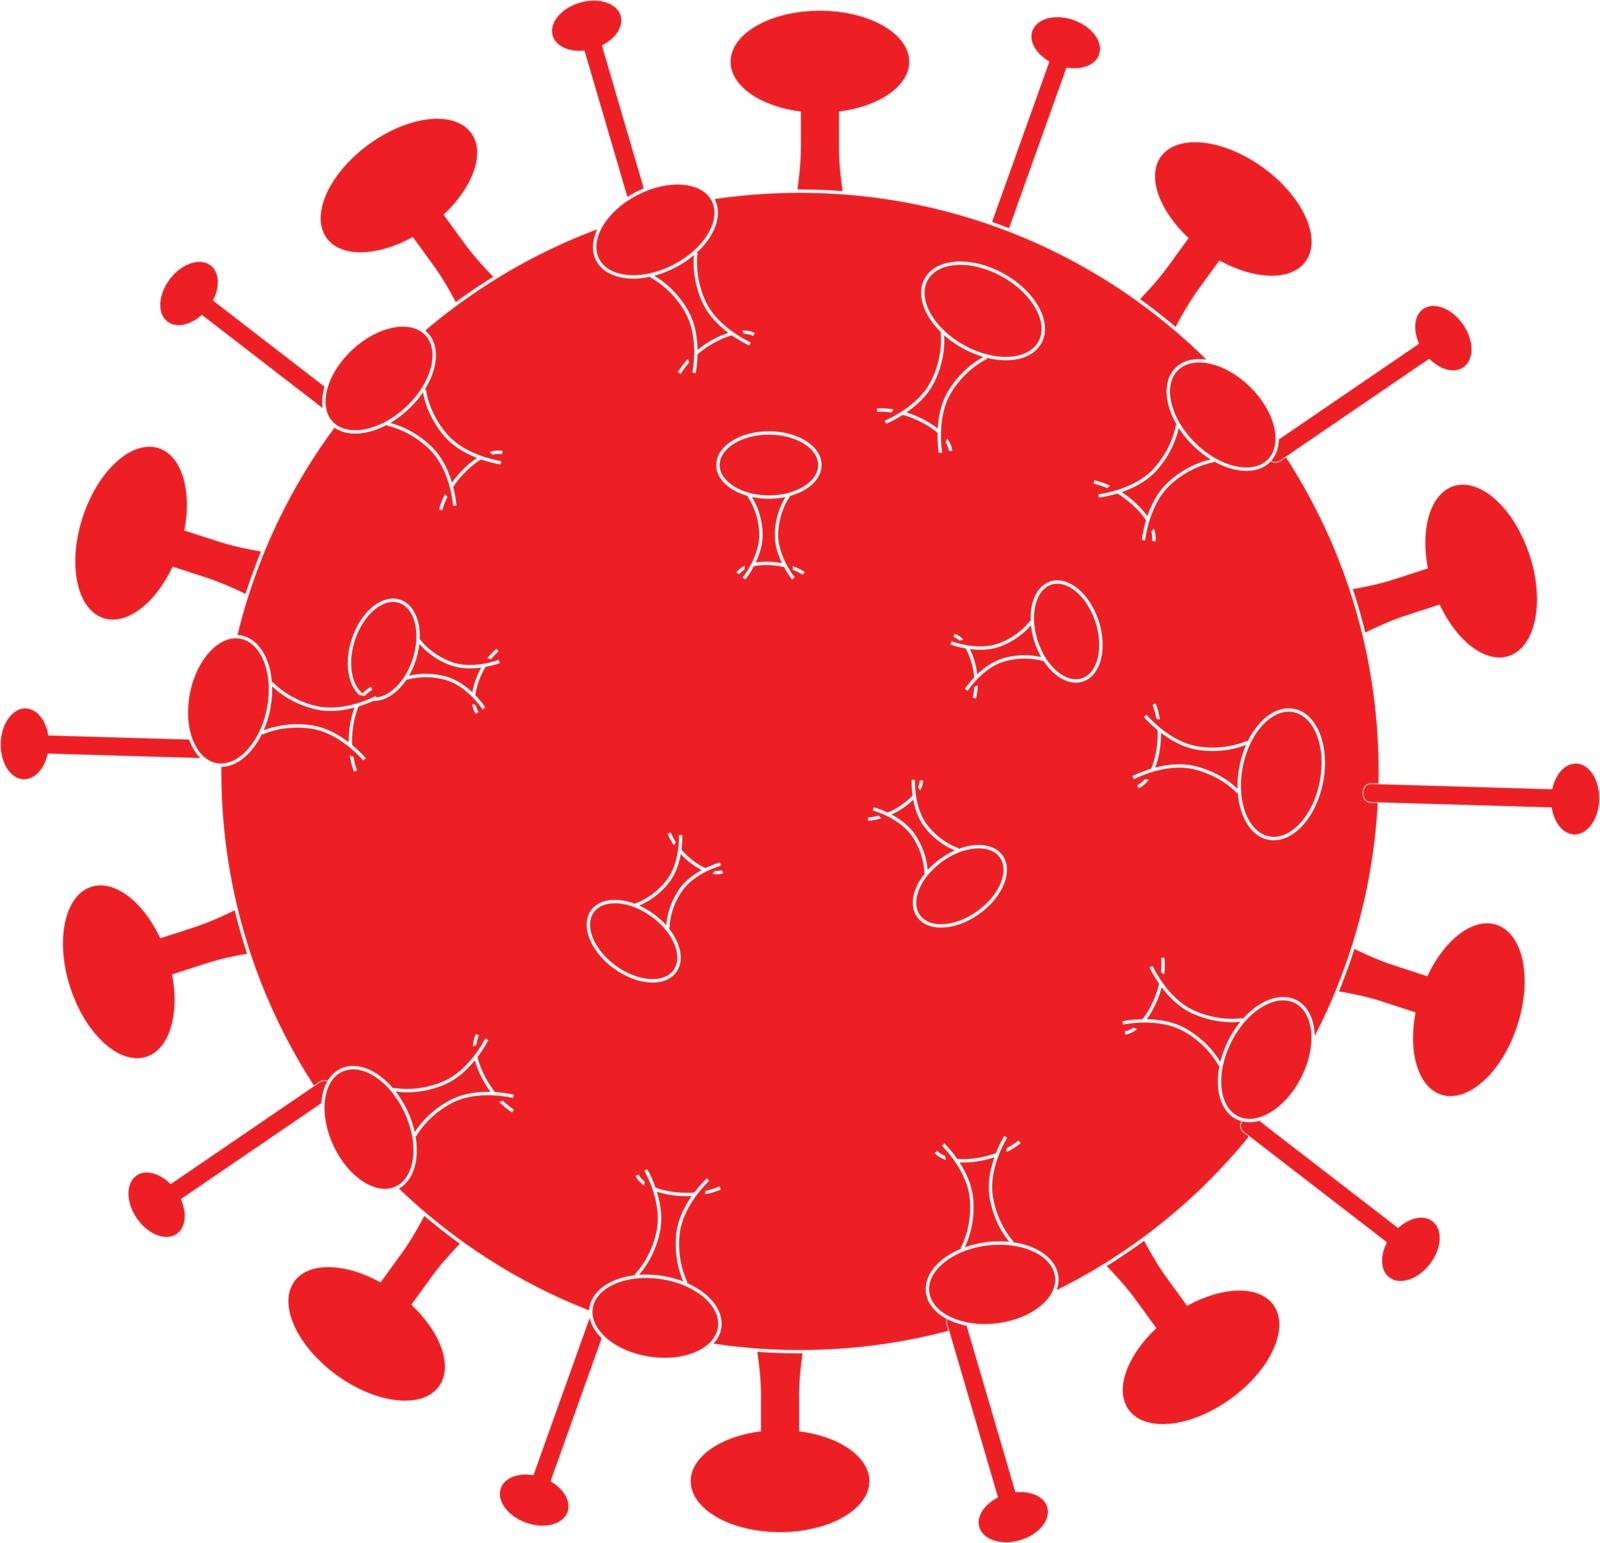 icon of coronavirus in red and white